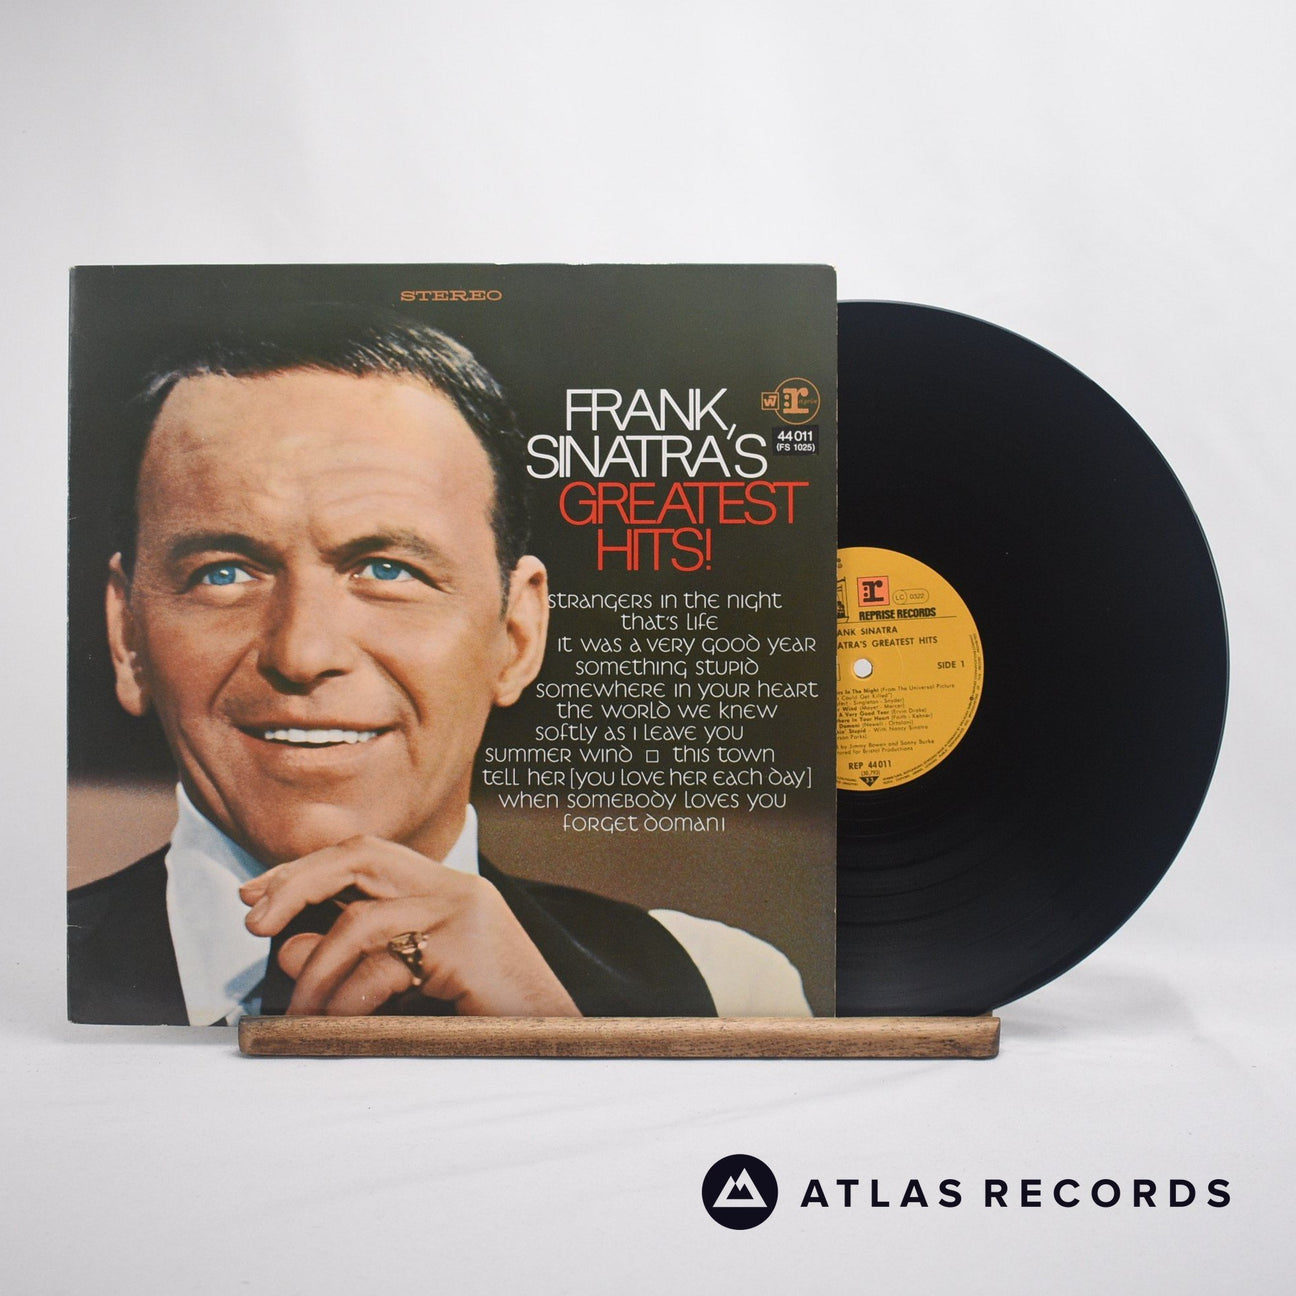 Frank Sinatra Frank Sinatra's Greatest Hits! LP Vinyl Record - Front Cover & Record